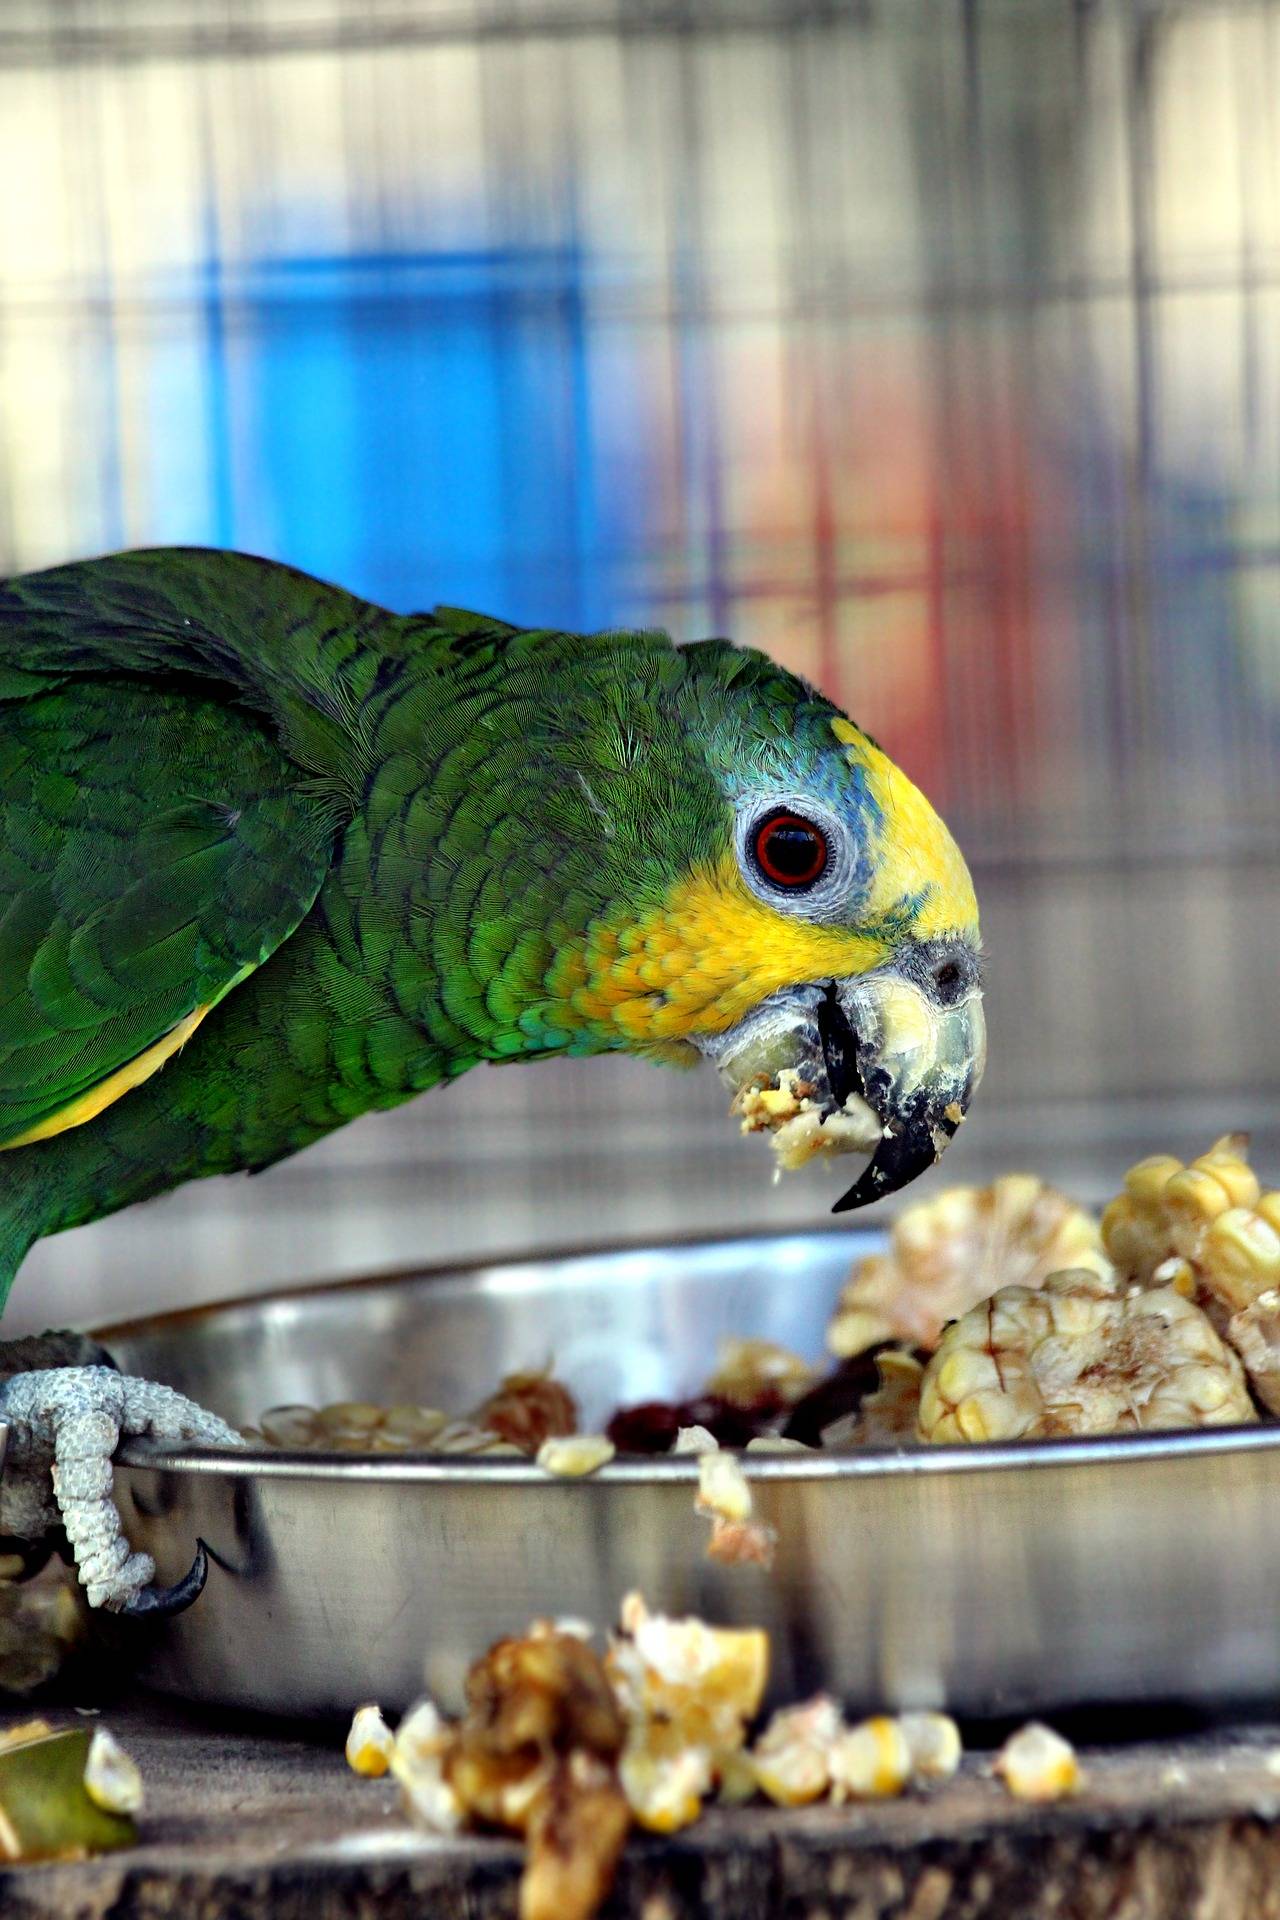 Особенности породы попугаев амазон